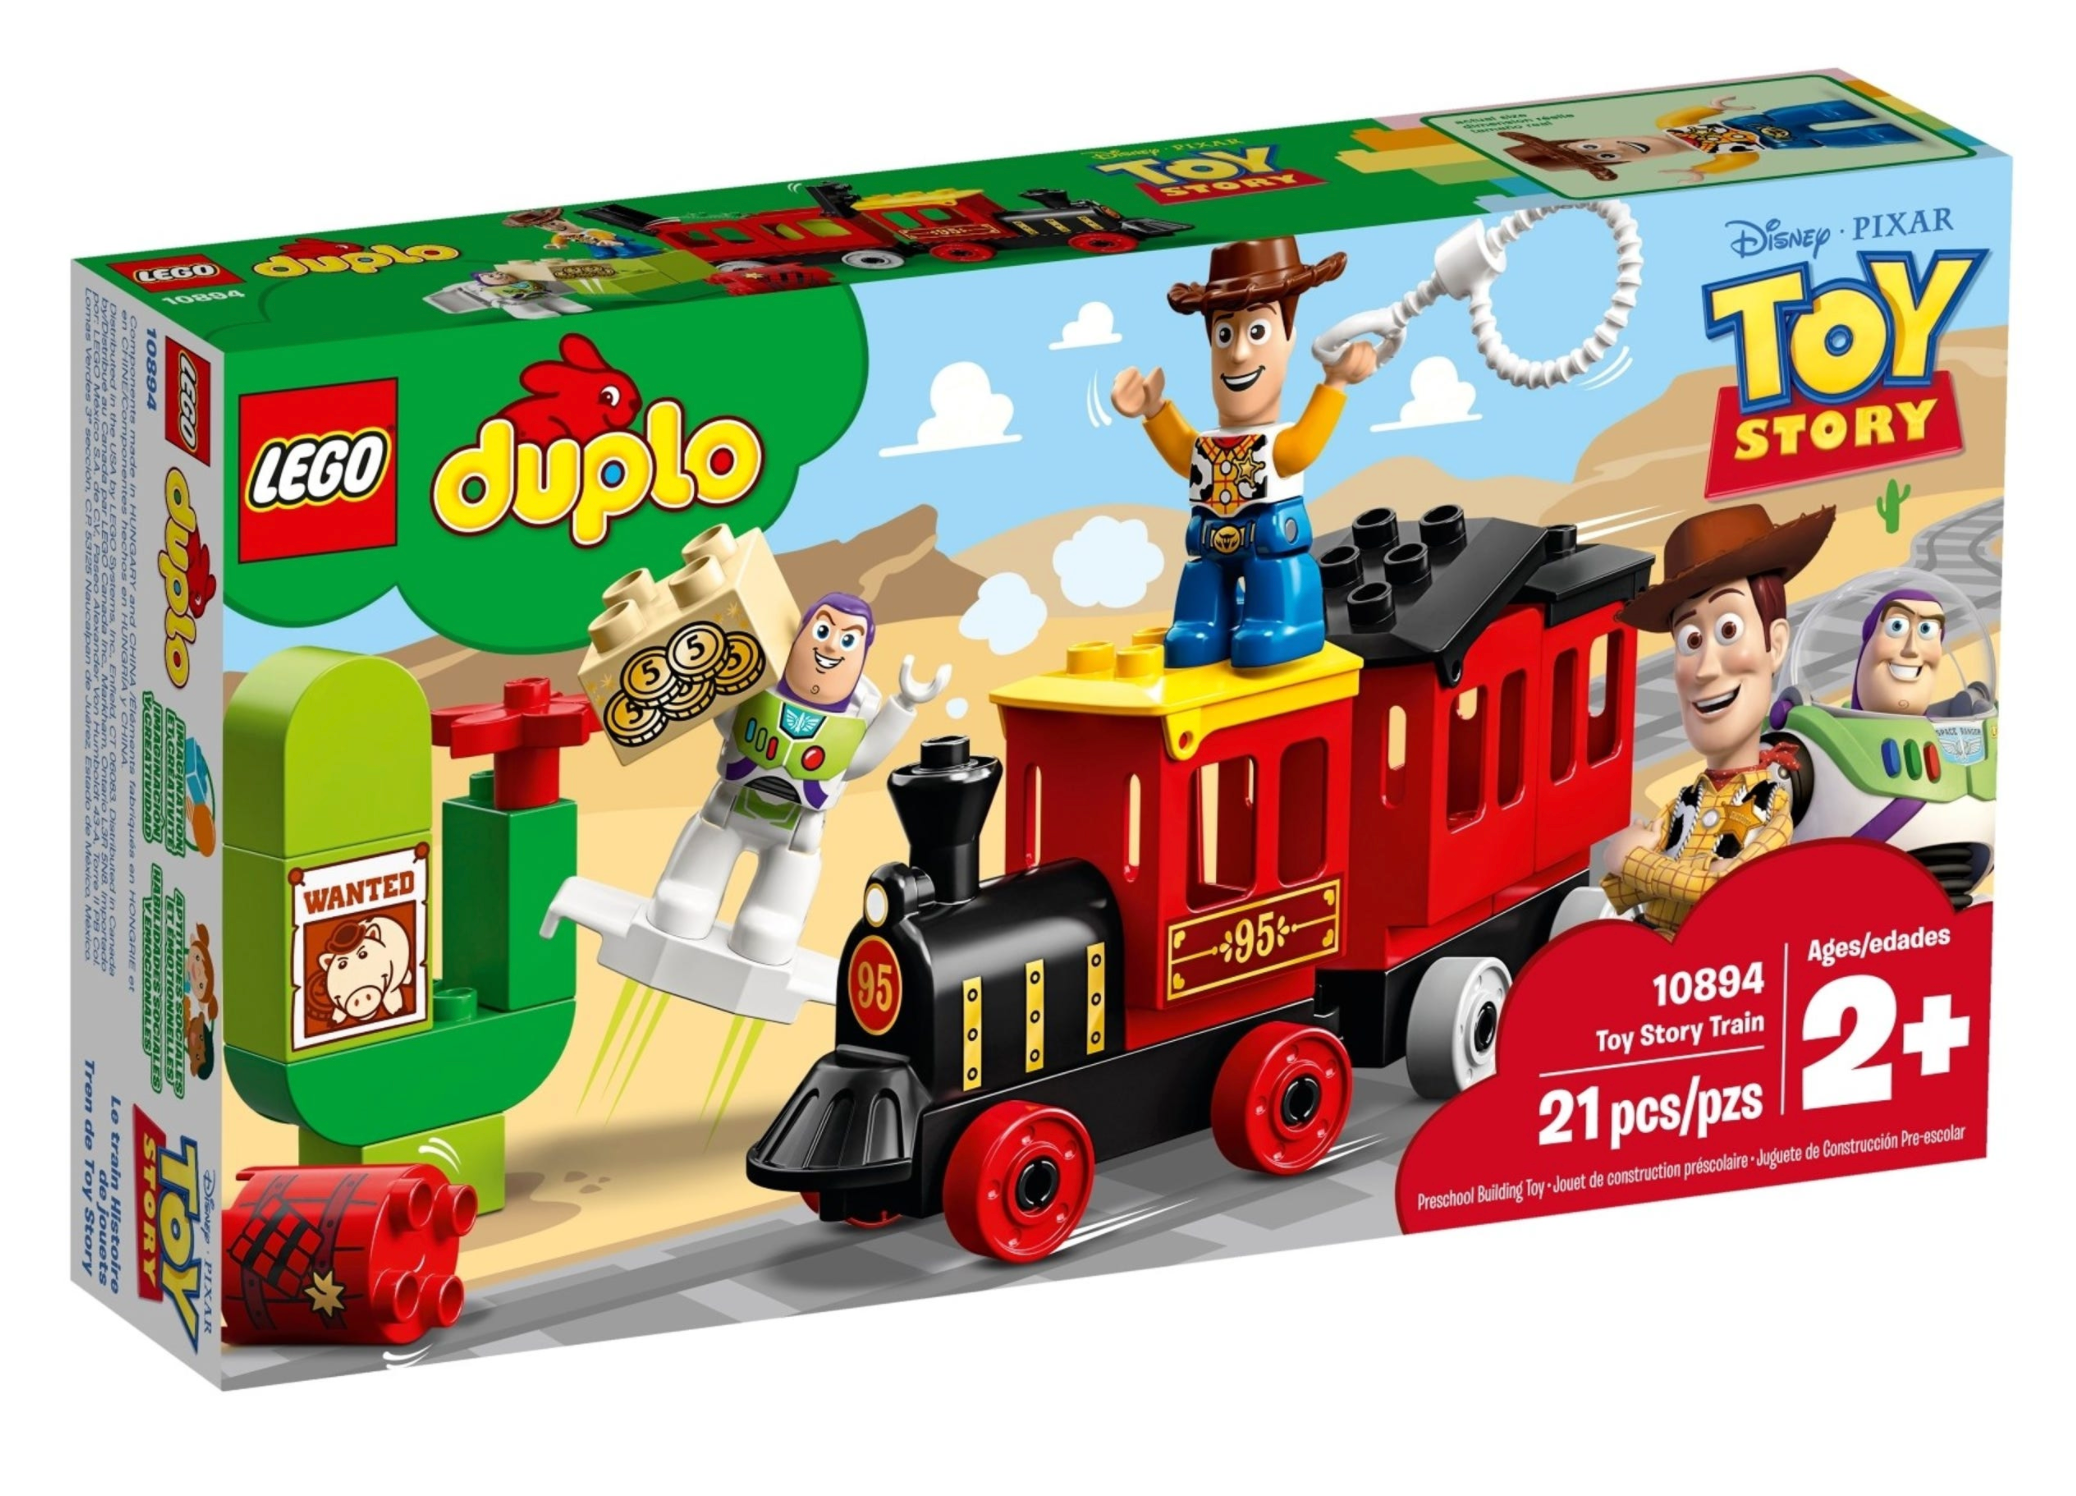 LEGO: DUPLO - Toy Story Train